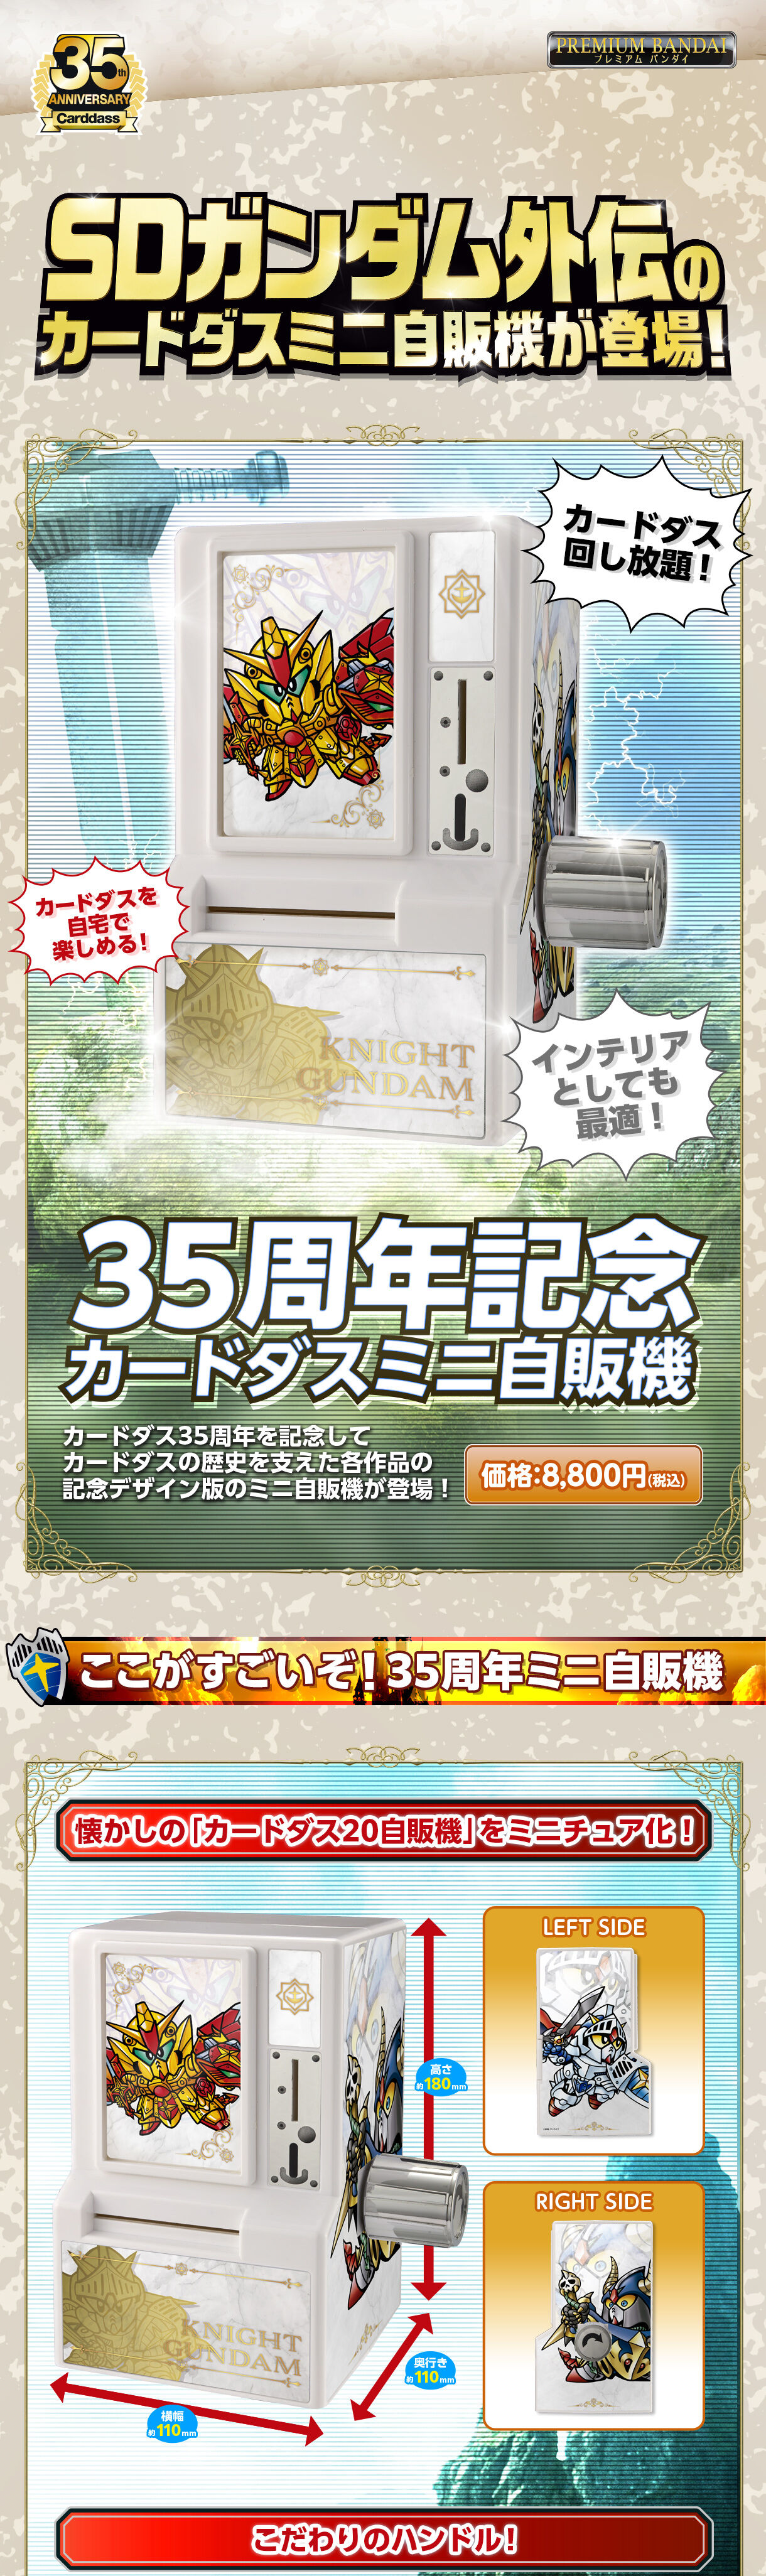 35th Anniversary Mini Carddass Vending Machine(SD Gundam Gaiden)